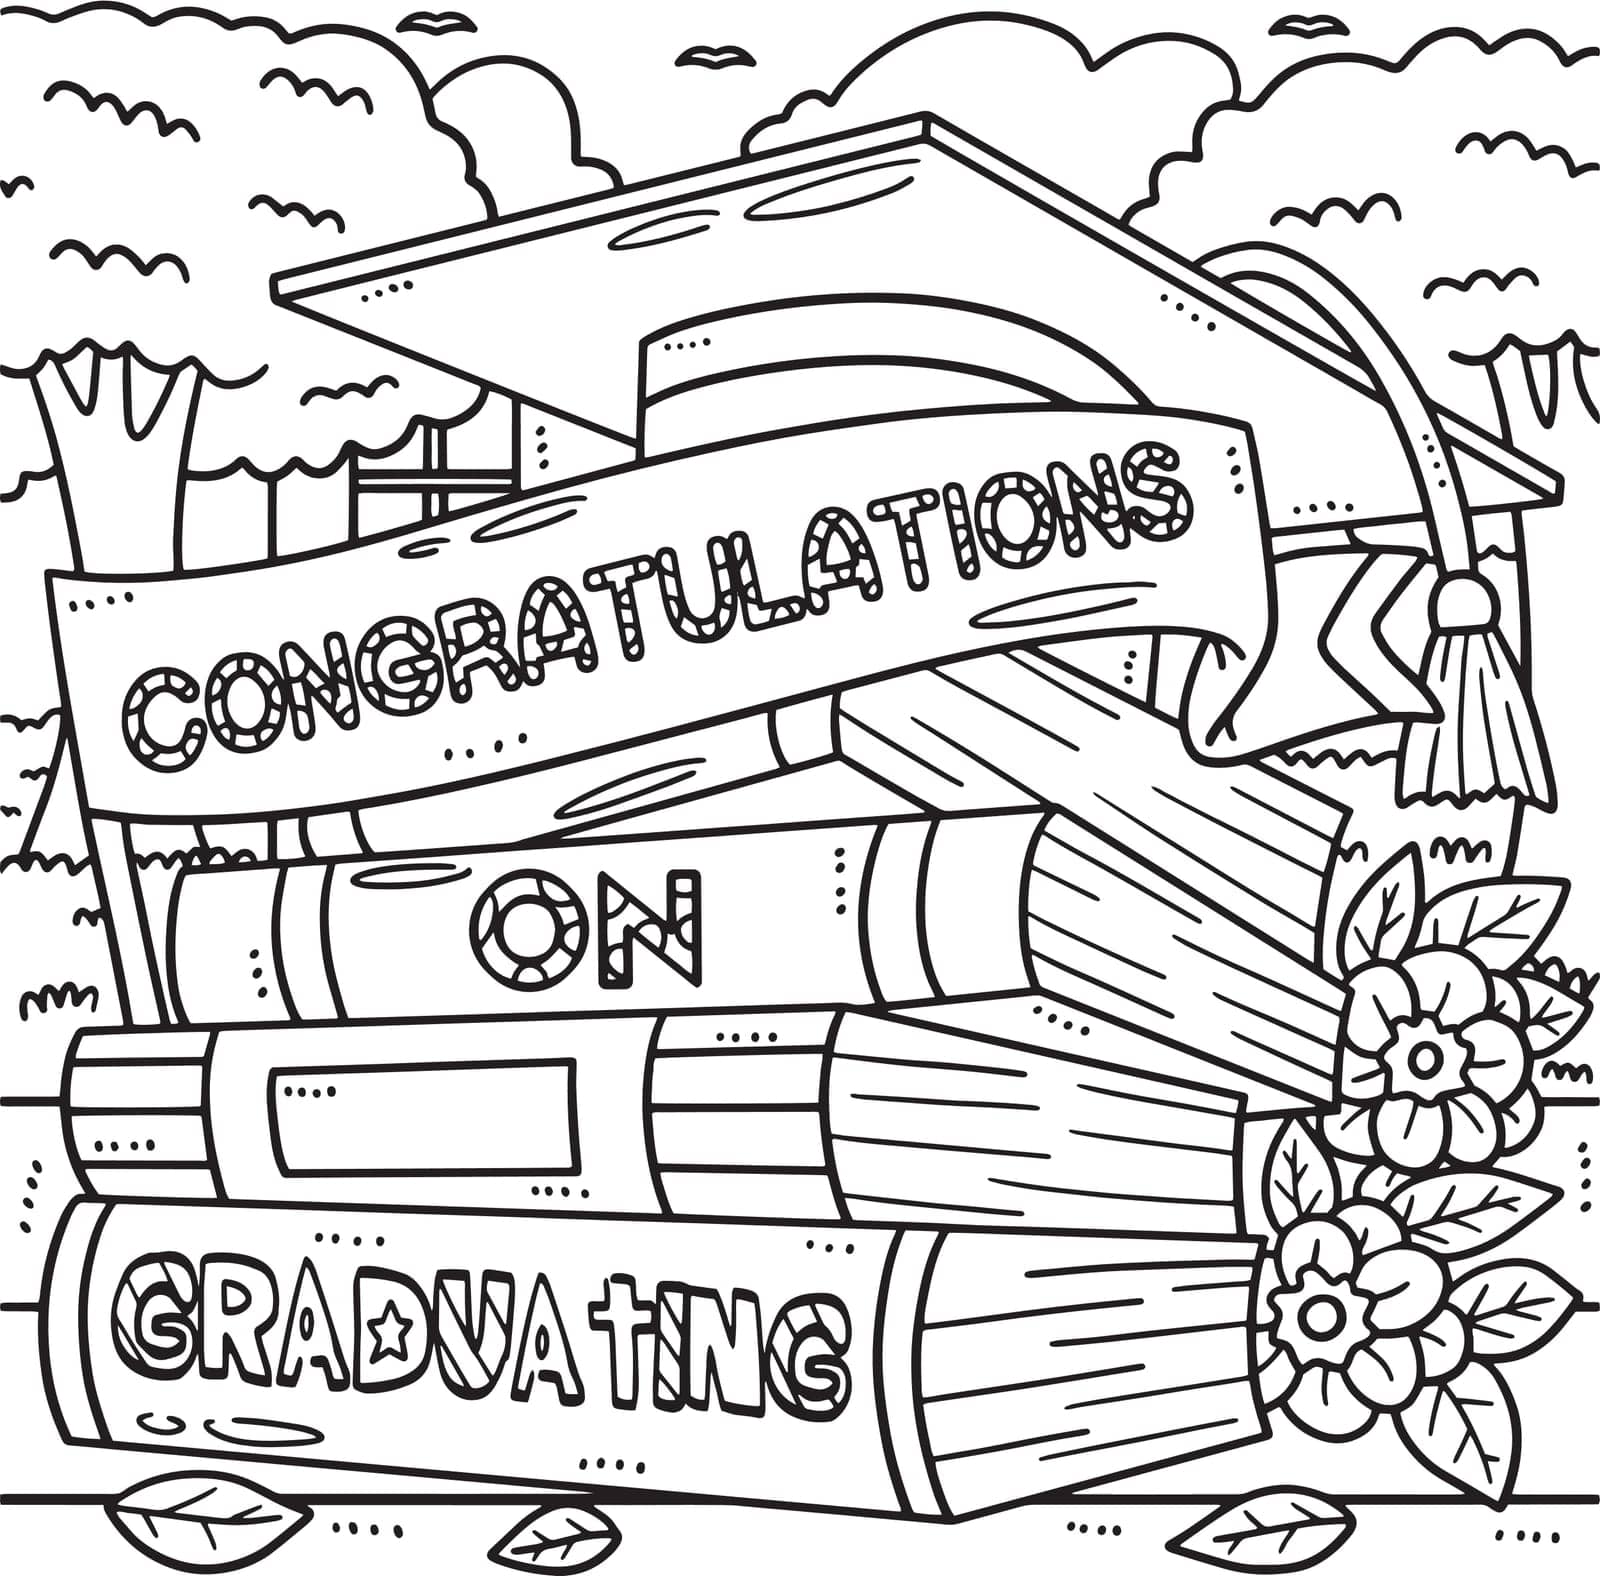 Graduation Congratulations on Graduating Coloring by abbydesign